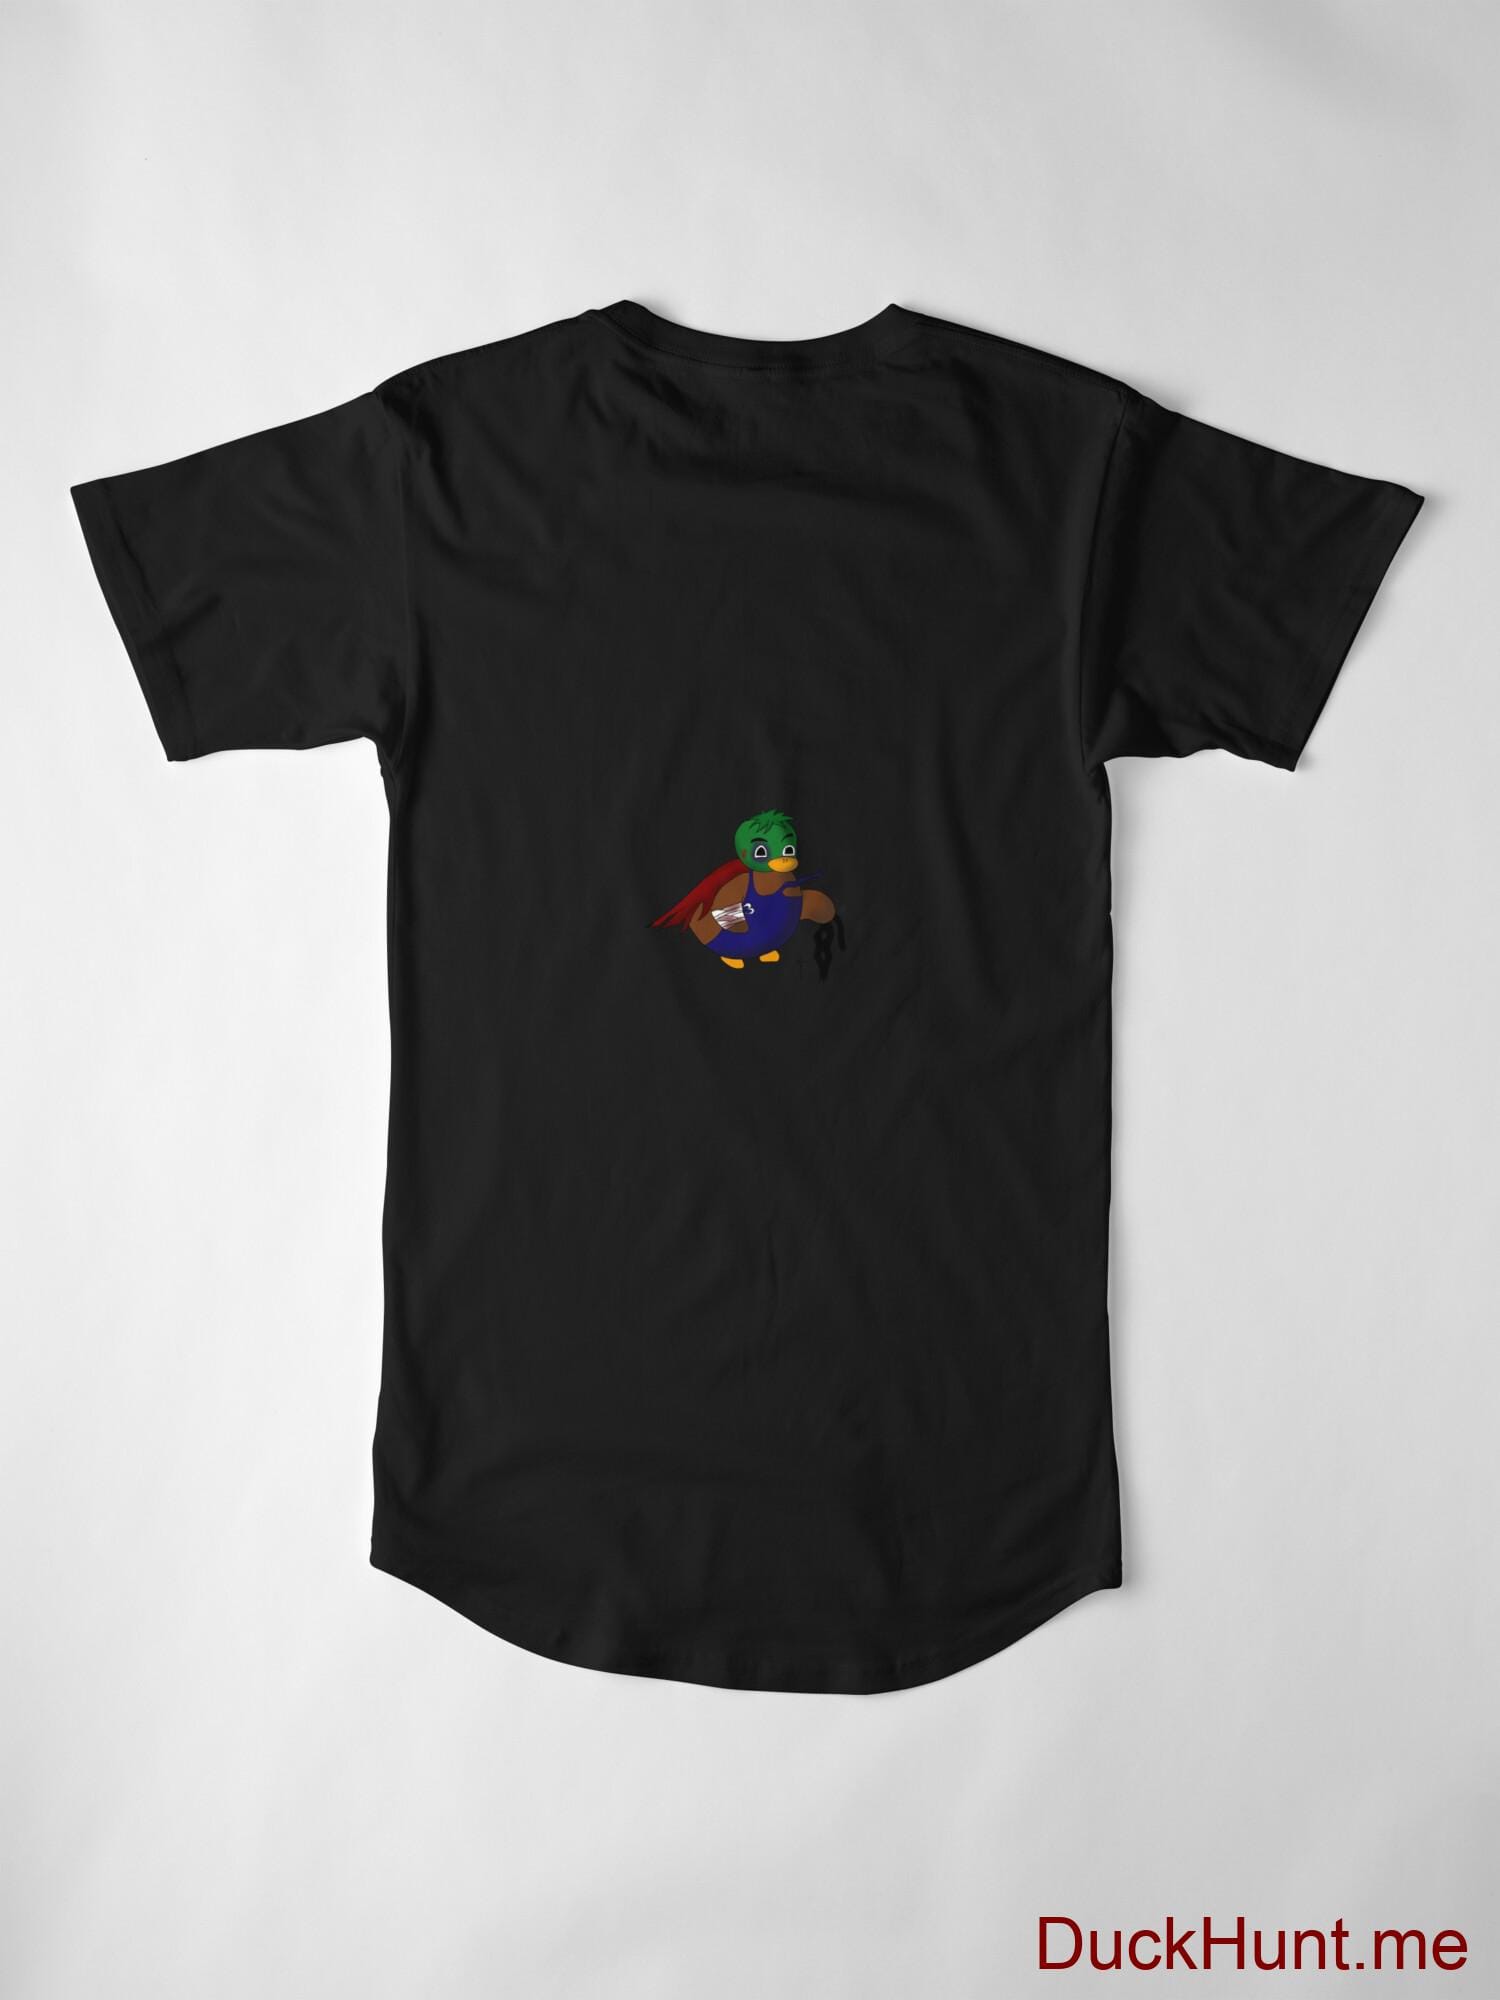 Dead DuckHunt Boss (smokeless) Black Long T-Shirt (Back printed) alternative image 2